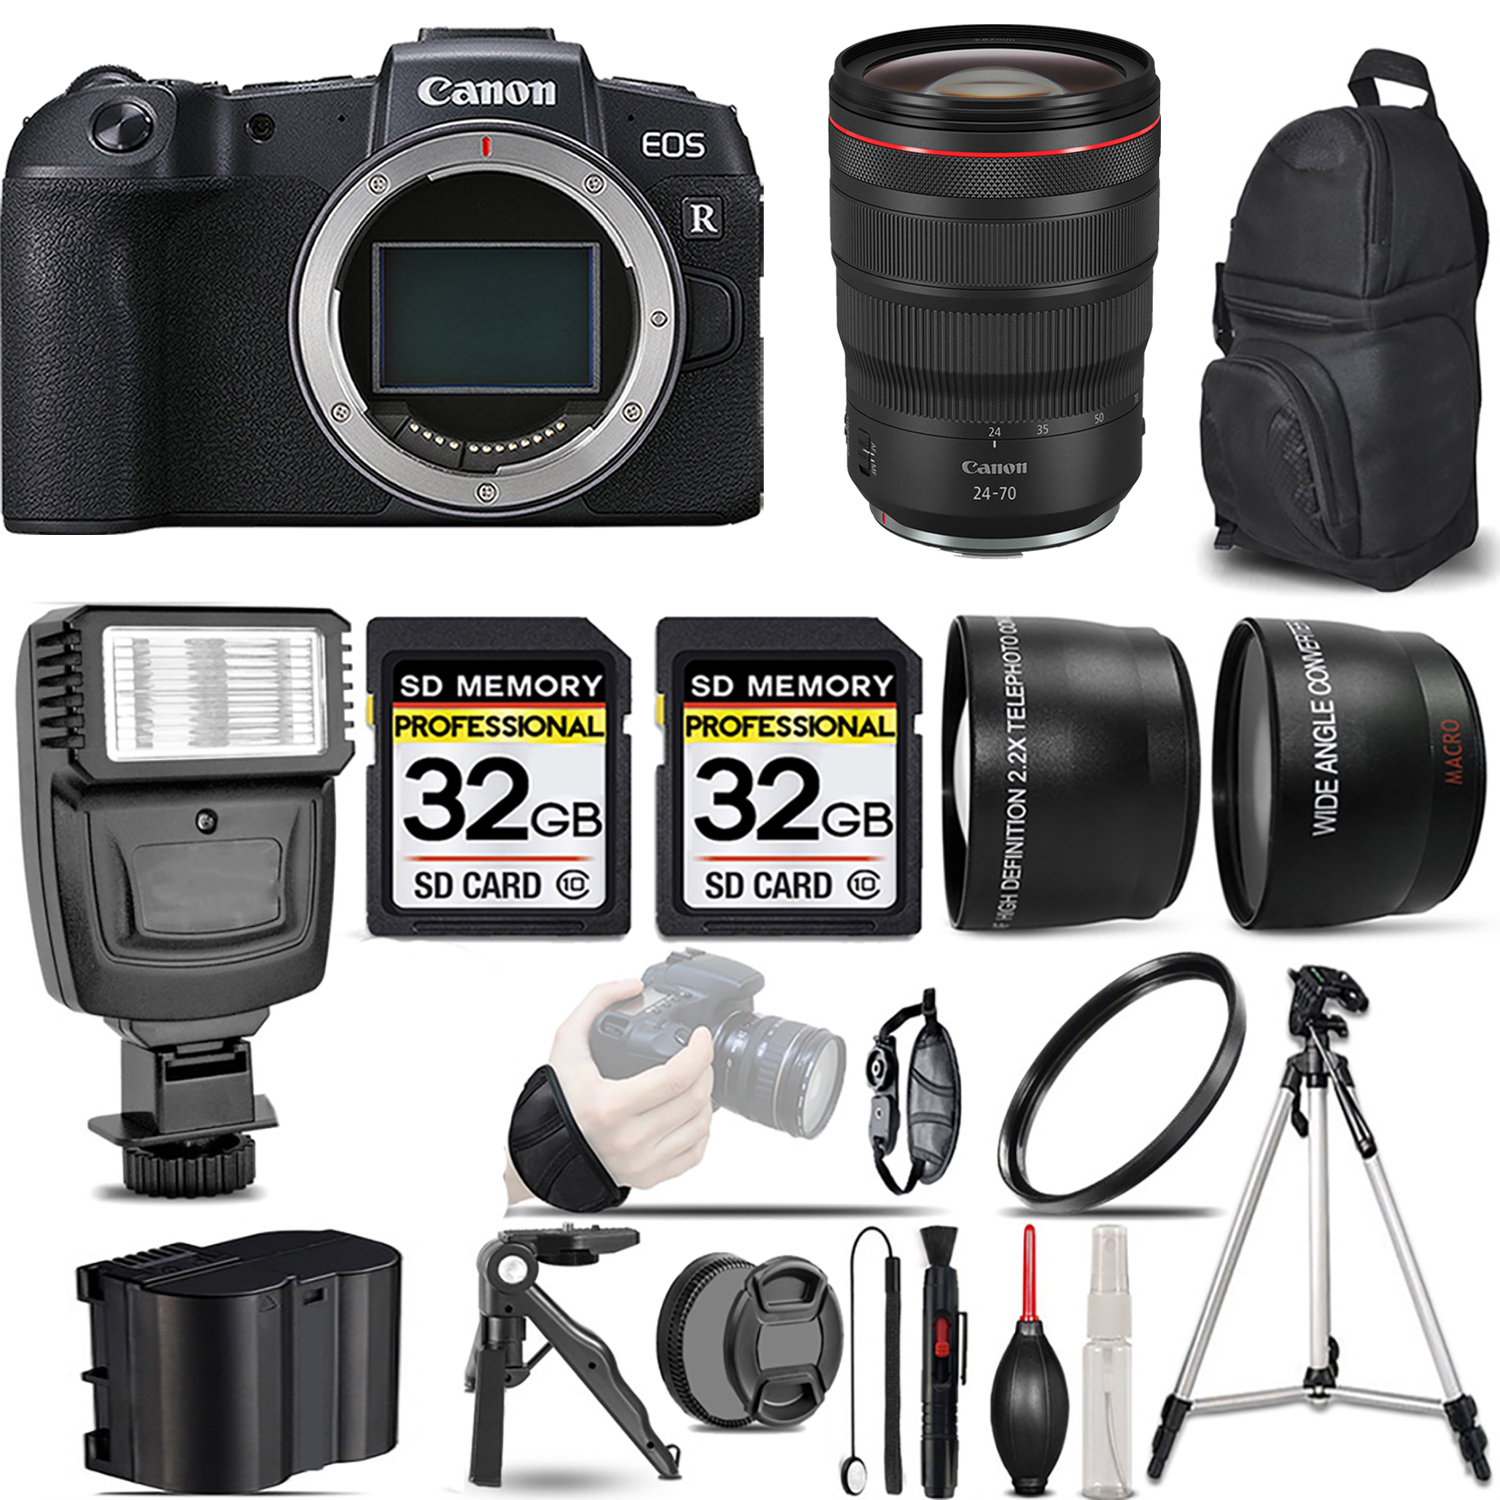 EOS RP Mirrorless Camera + 24-70mm f/2.8 L IS USM Lens + Flash + 64GB - Kit *FREE SHIPPING*